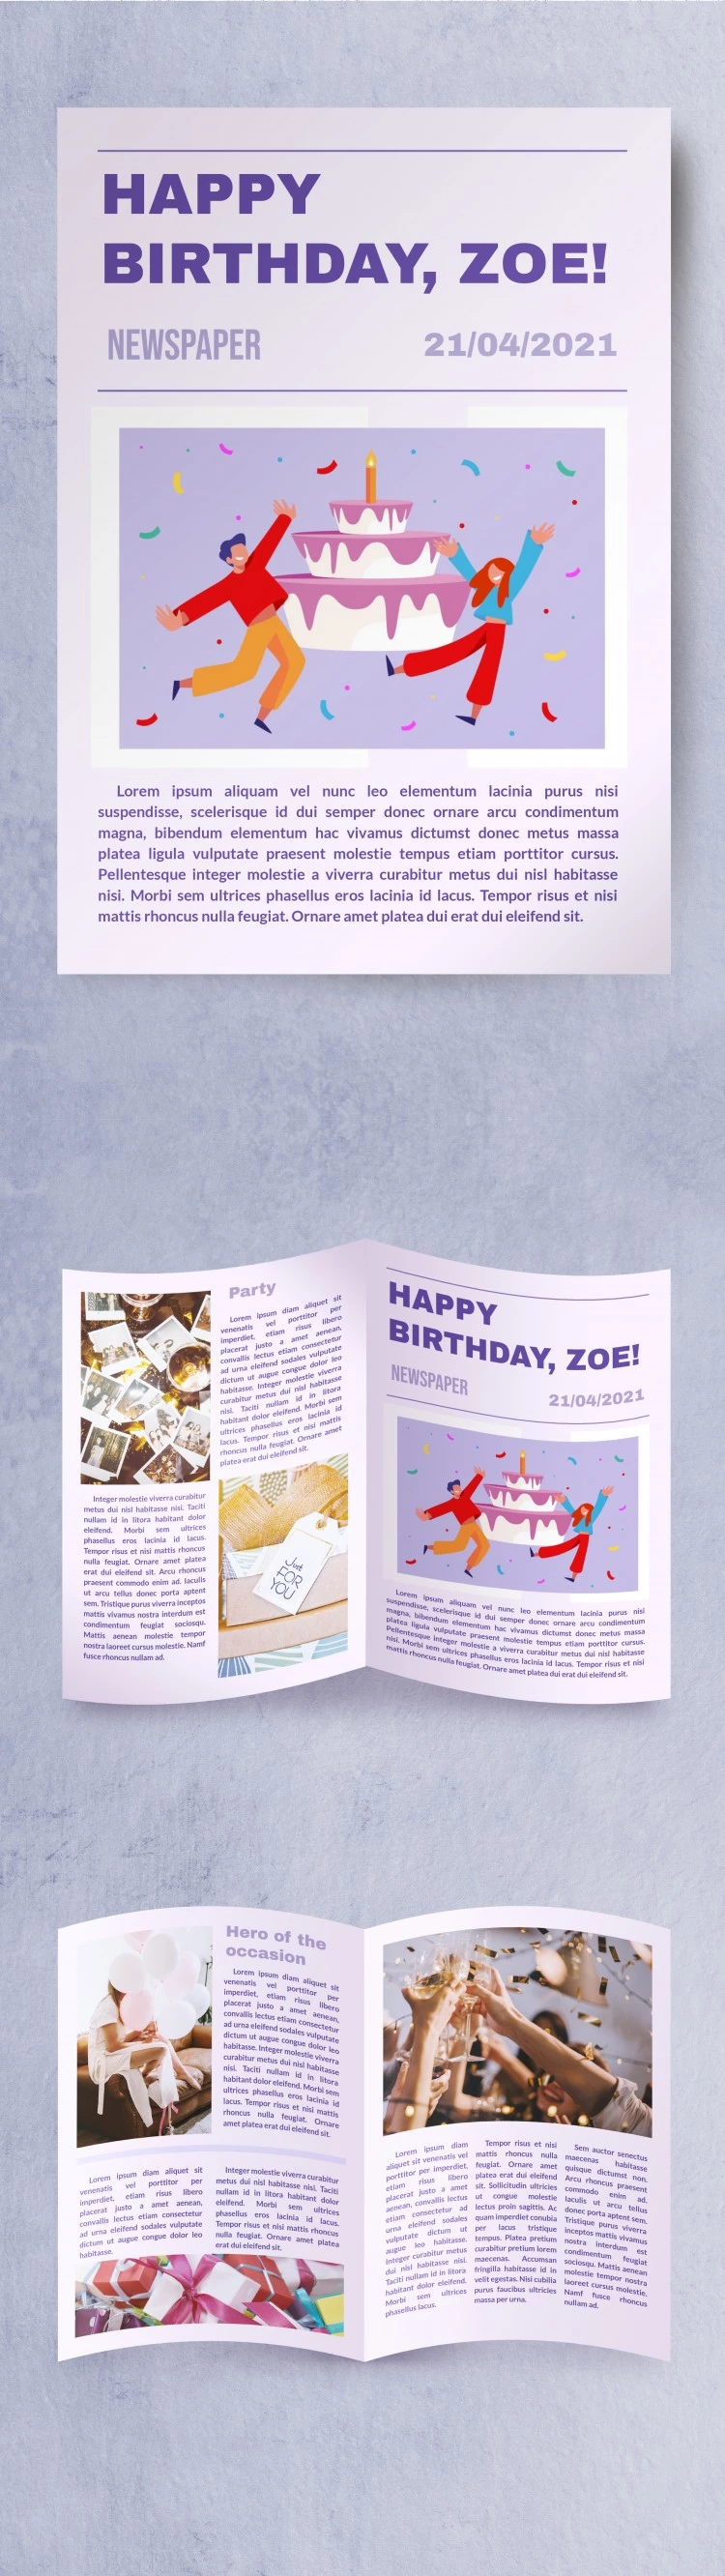 Cute Birthday Newspaper - free Google Docs Template - 10061690